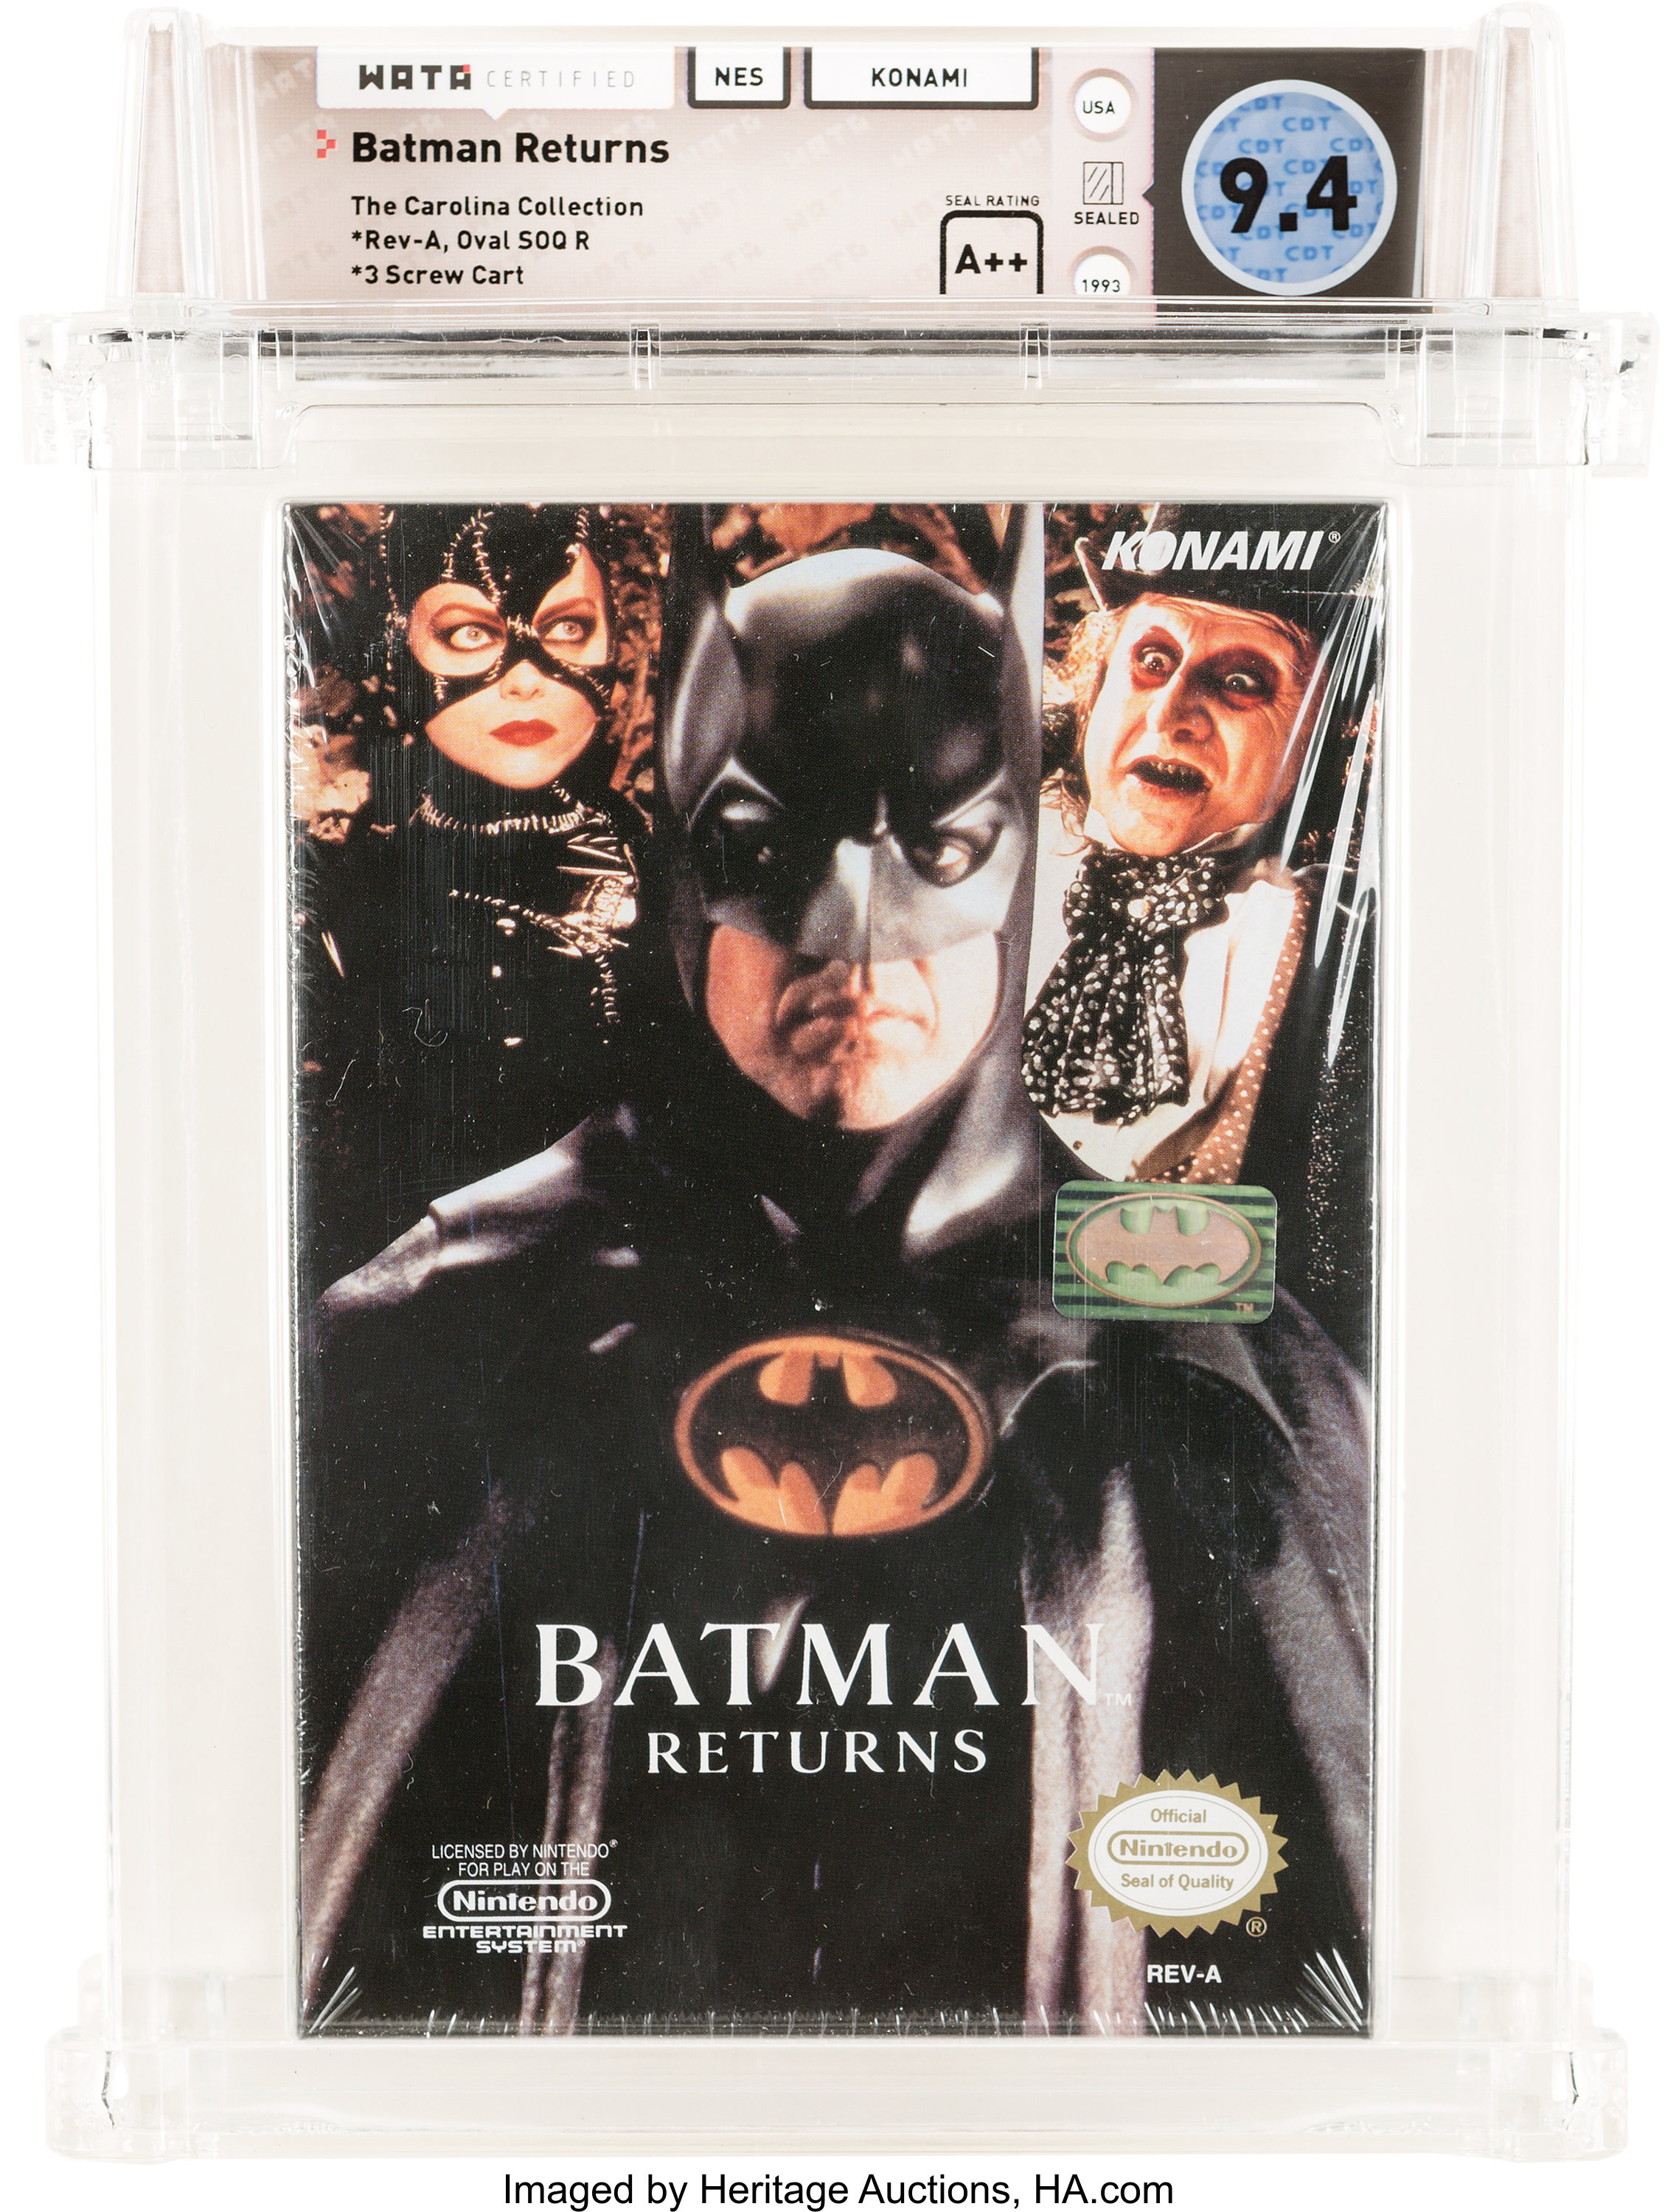 Batman Returns - Carolina Collection Wata  A++ Sealed NES Konami | Lot  #97036 | Heritage Auctions